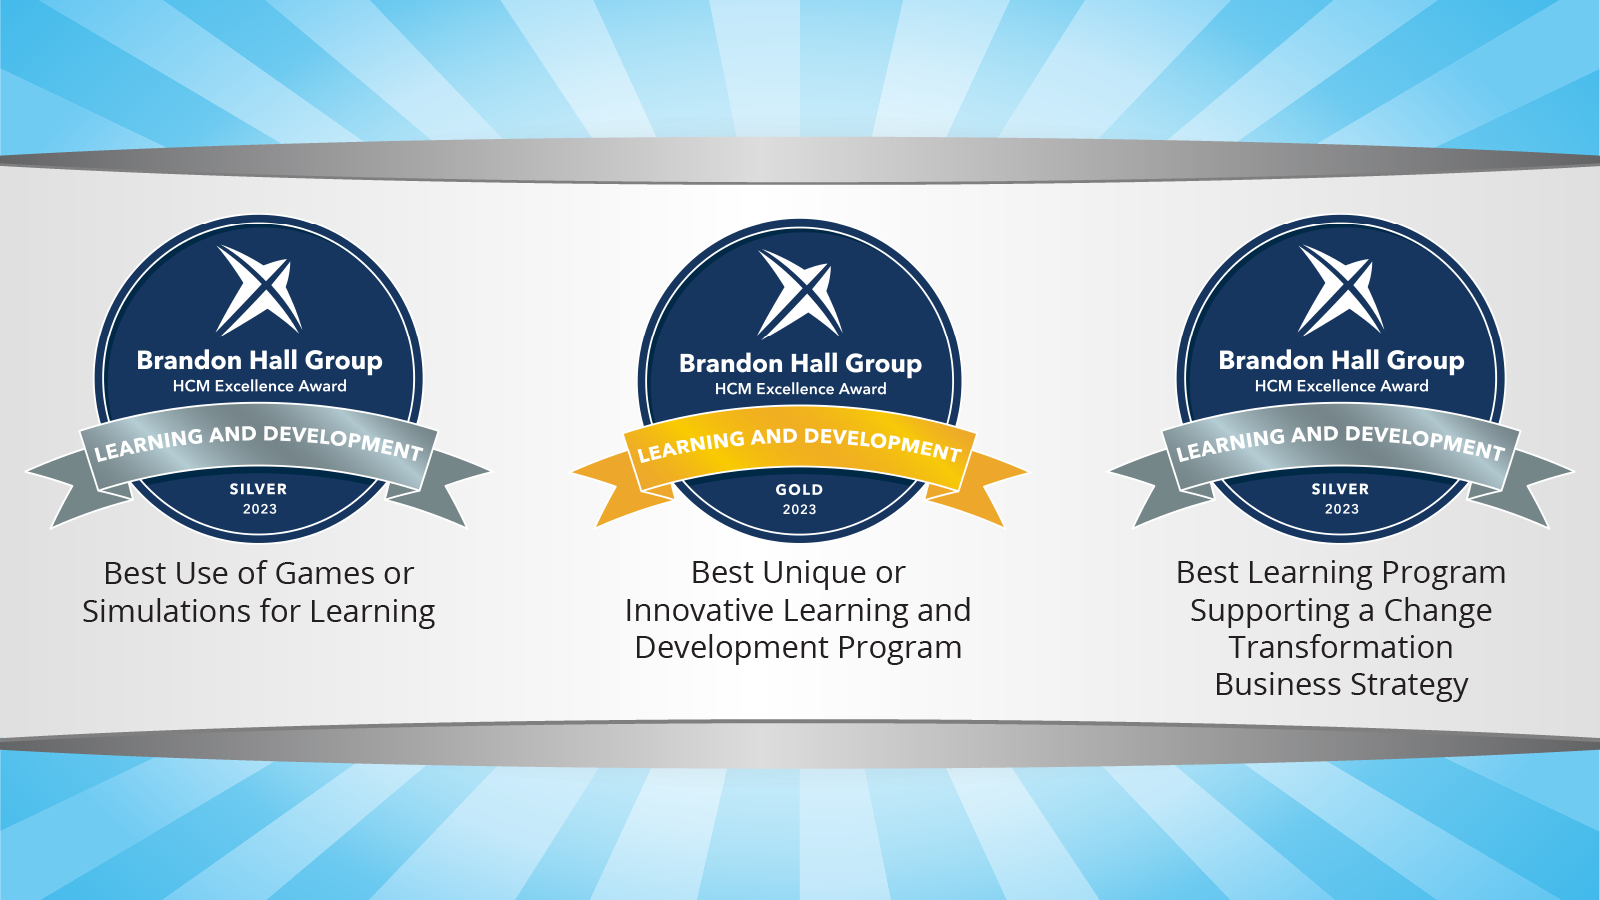 Award-winning leadership development programs